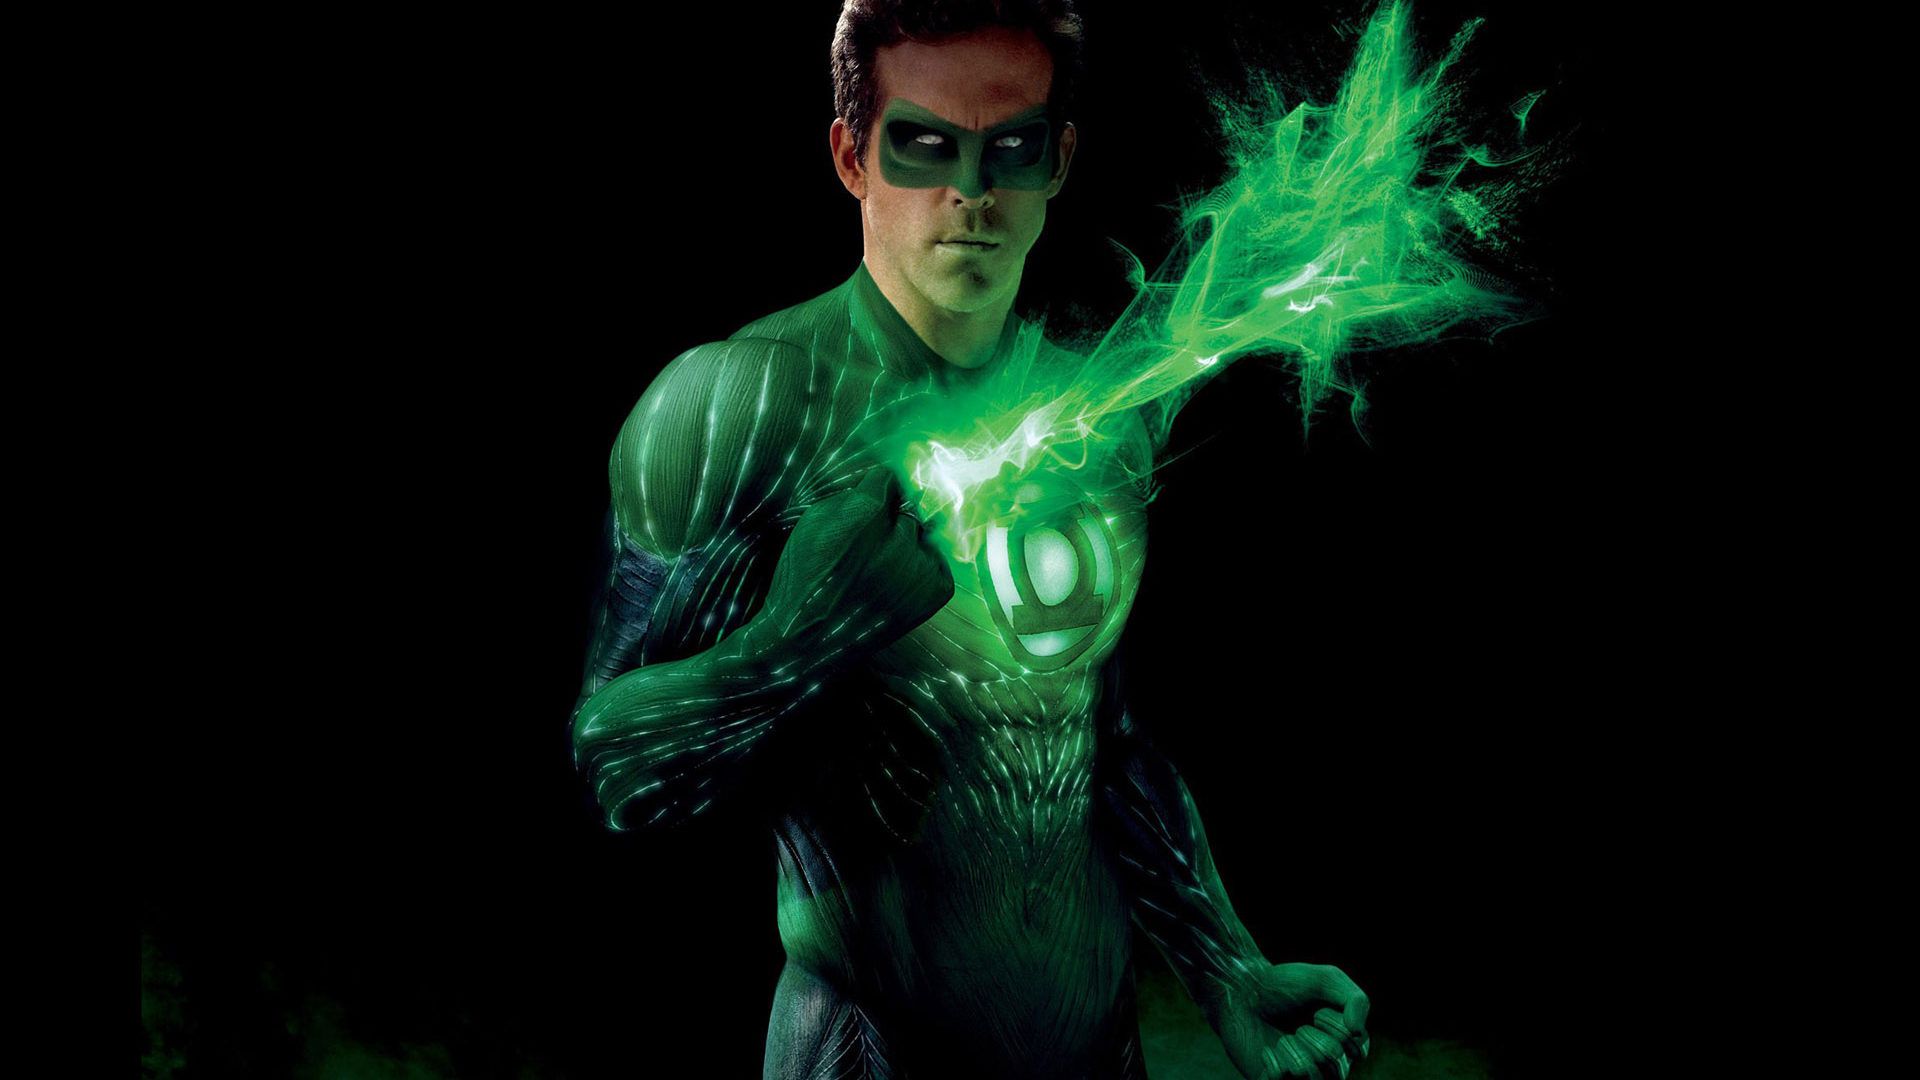 Green Lantern Hal Jordan Ryan Reynolds Story Of The Superhero On The Big Screen HD Wallpaper For Mobile Phones Tablet And Lapx1200, Wallpaper13.com